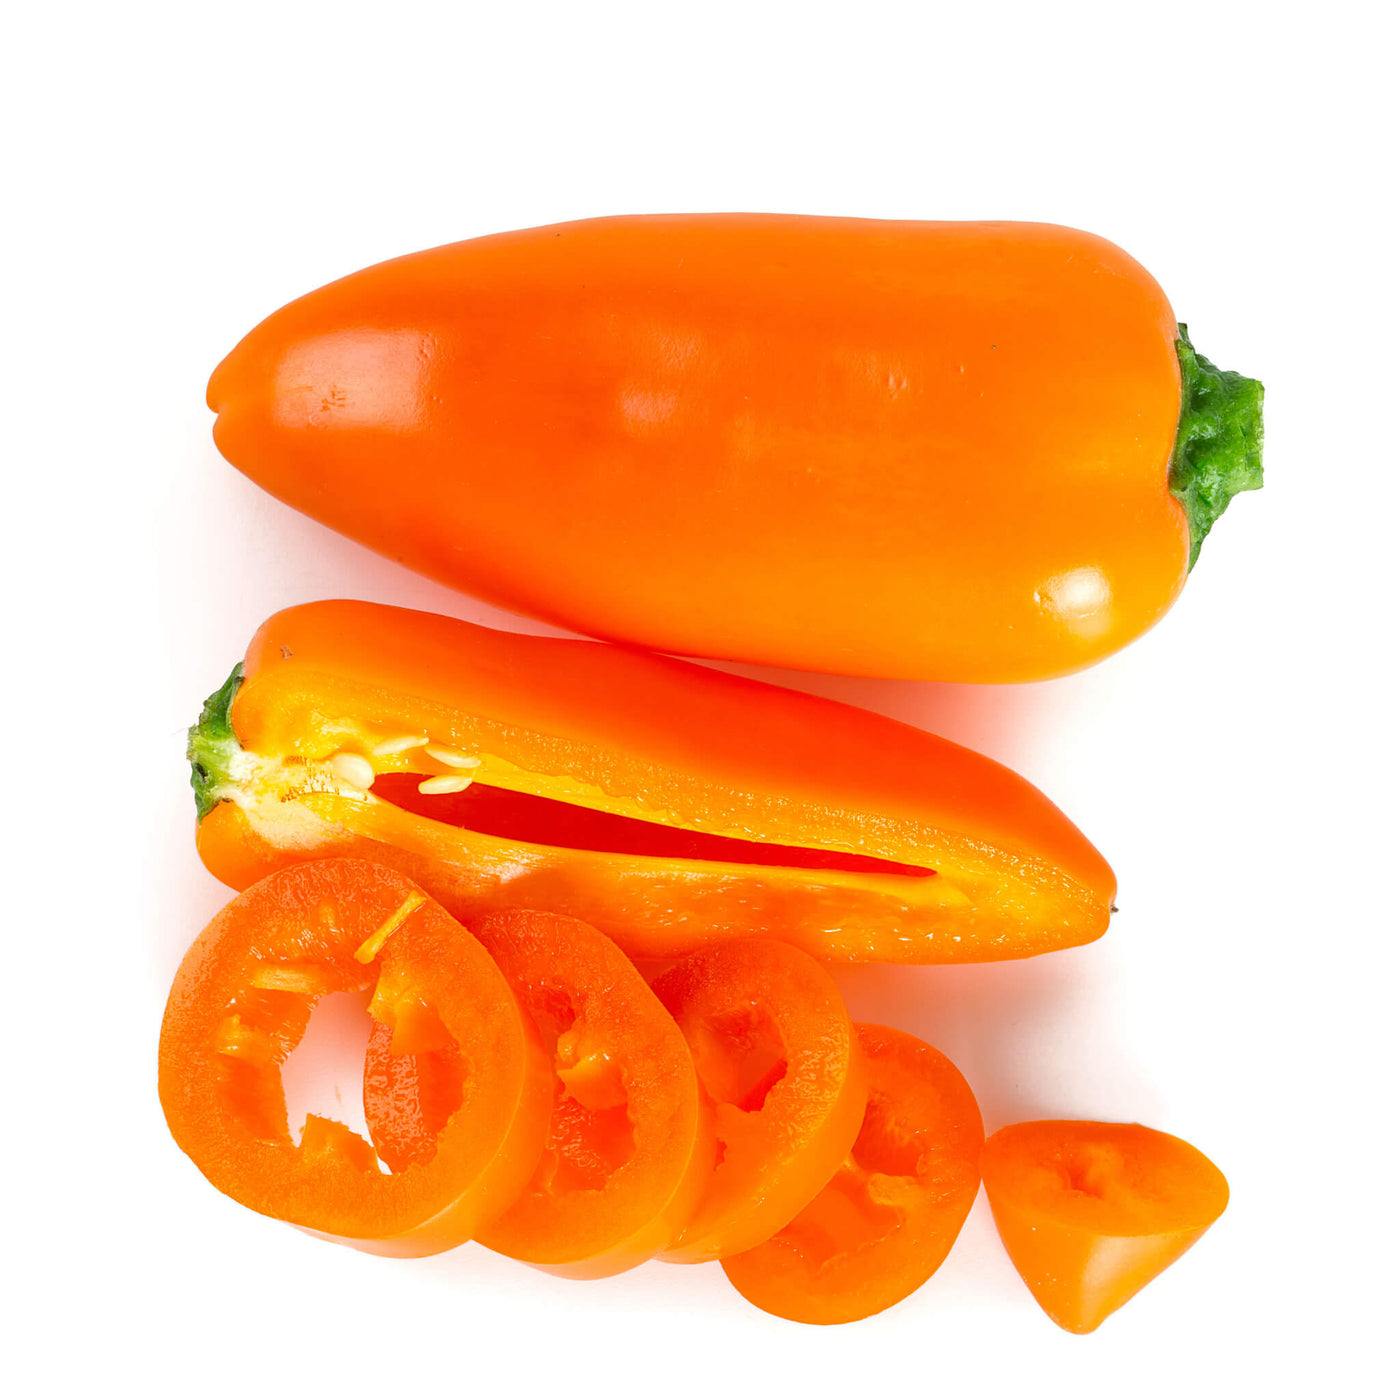 Snackpaprika orange, Gemüse, Aquaponik, Hochbeet oder Garten